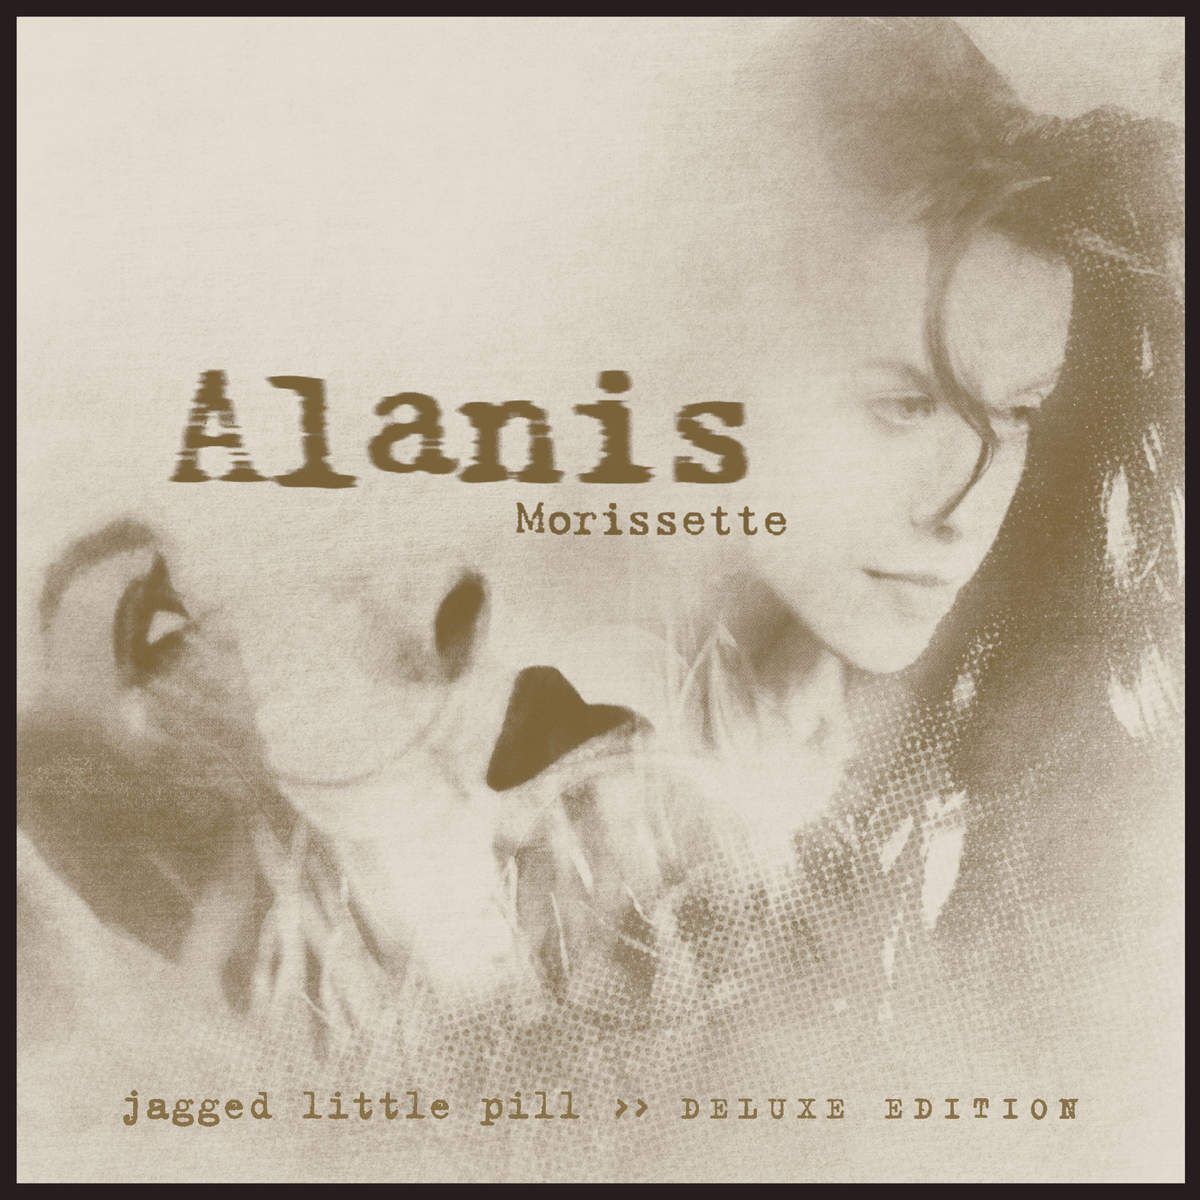 Jagged Little Pill Deluxe Edition - Alanis Morissette 2 CD Set New 2015 